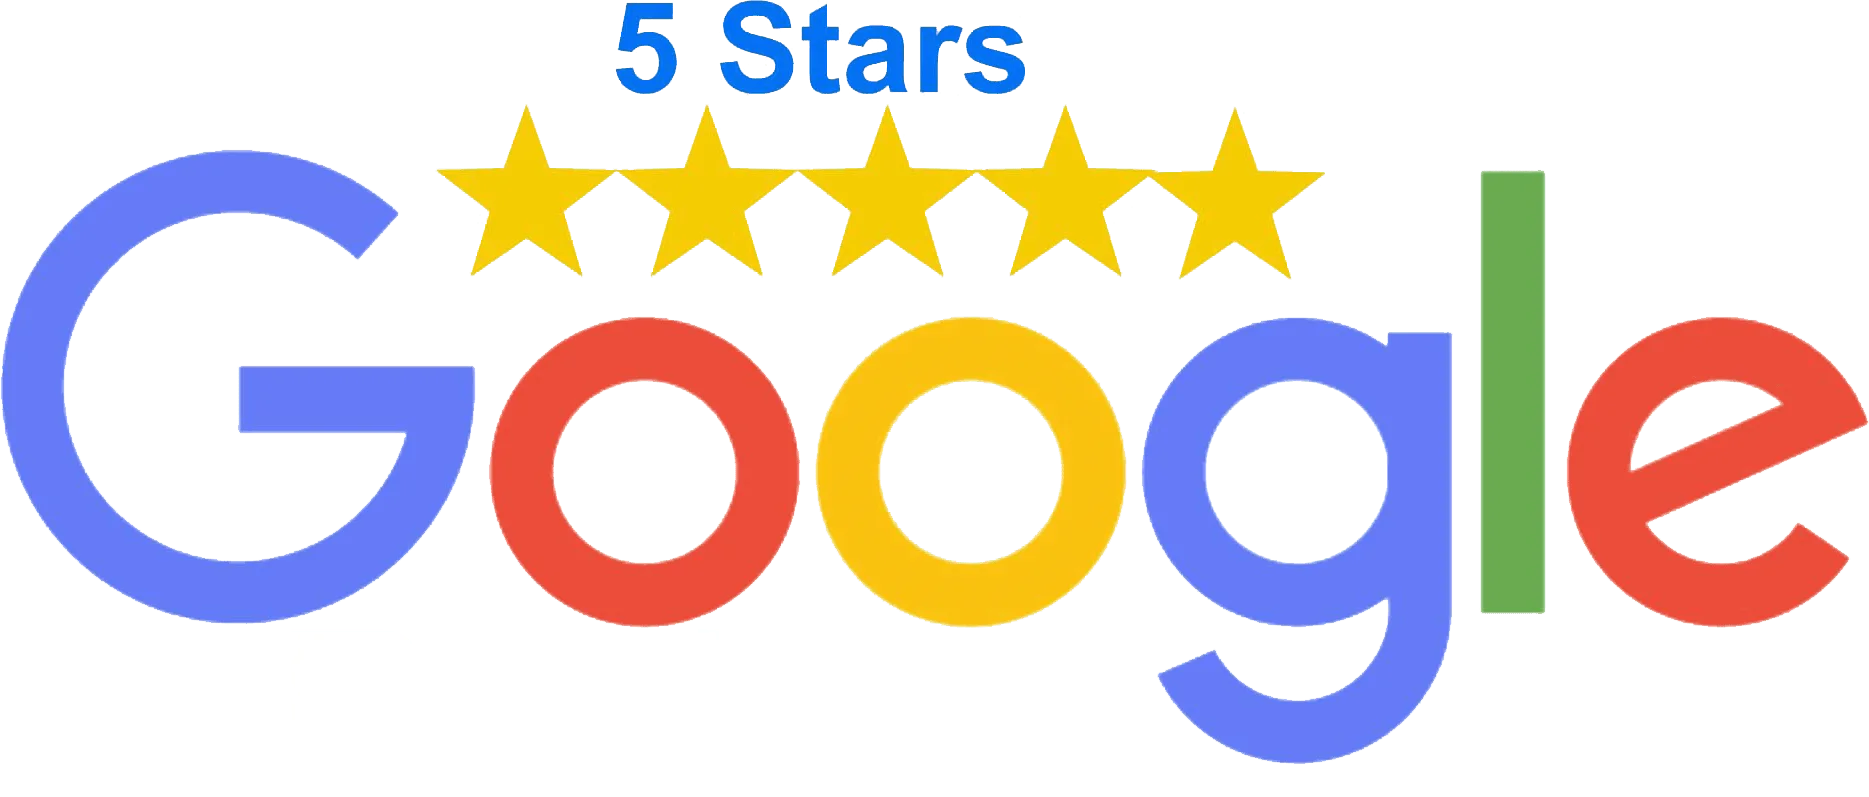 Google Star Rating